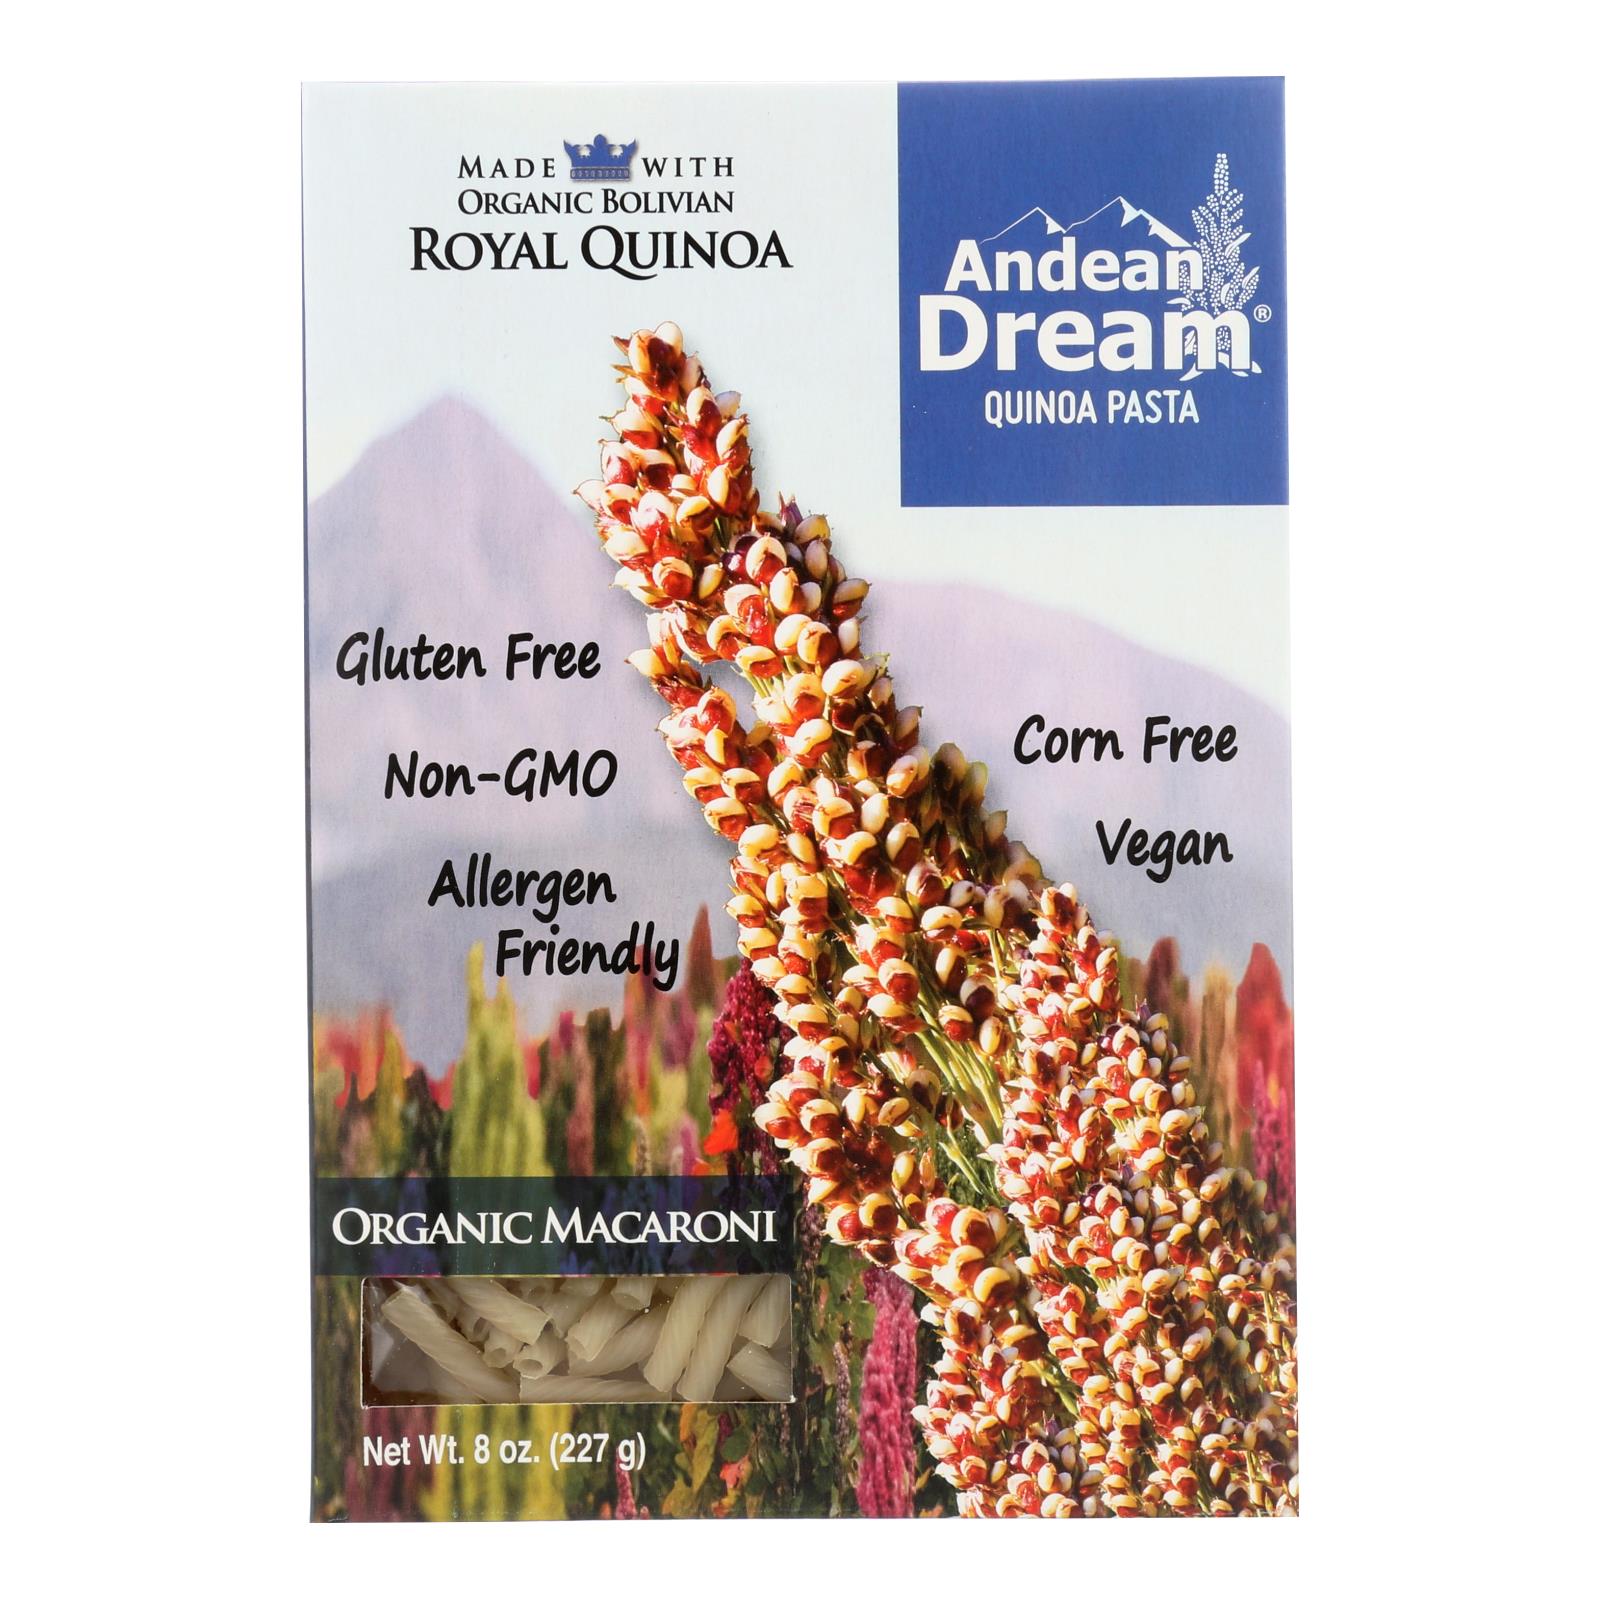 Andean Dream, Andean Dream Gluten Free Organic Macaroni Quinoa Pasta - Case of 12 - 8 oz. (Pack of 12)